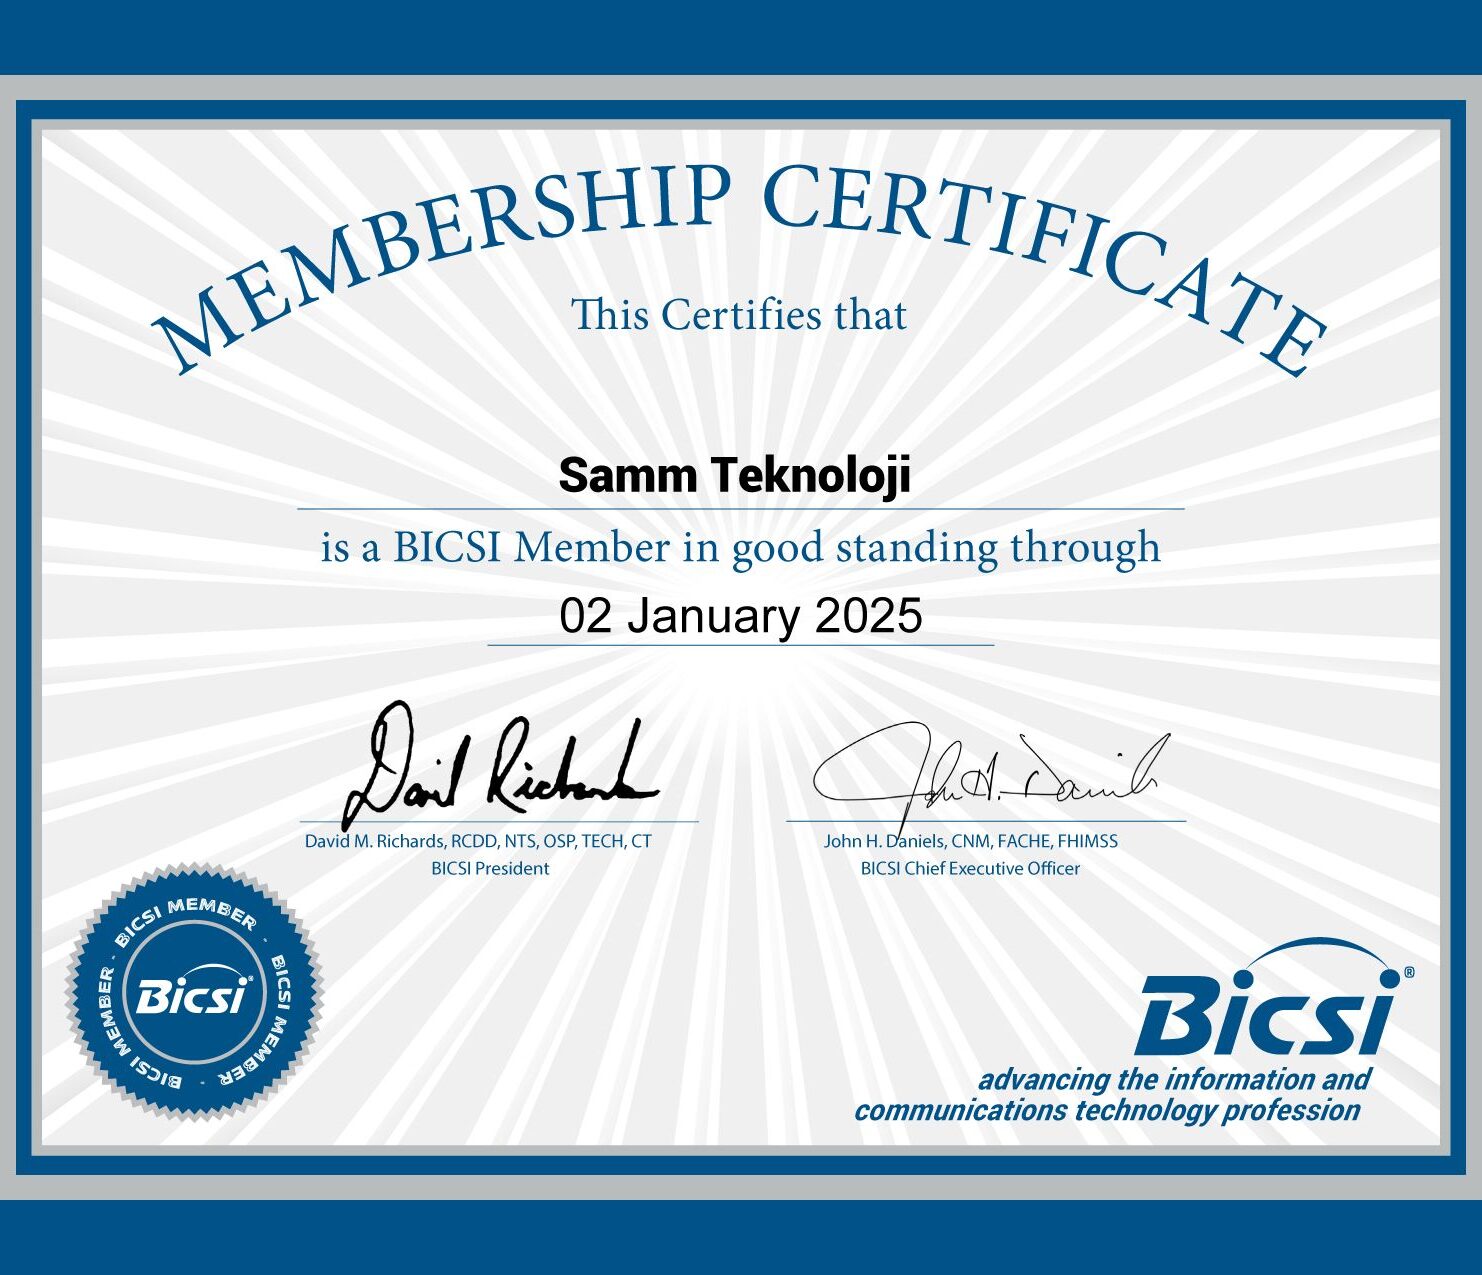 Member of Bicsi-SAMM Teknoloji